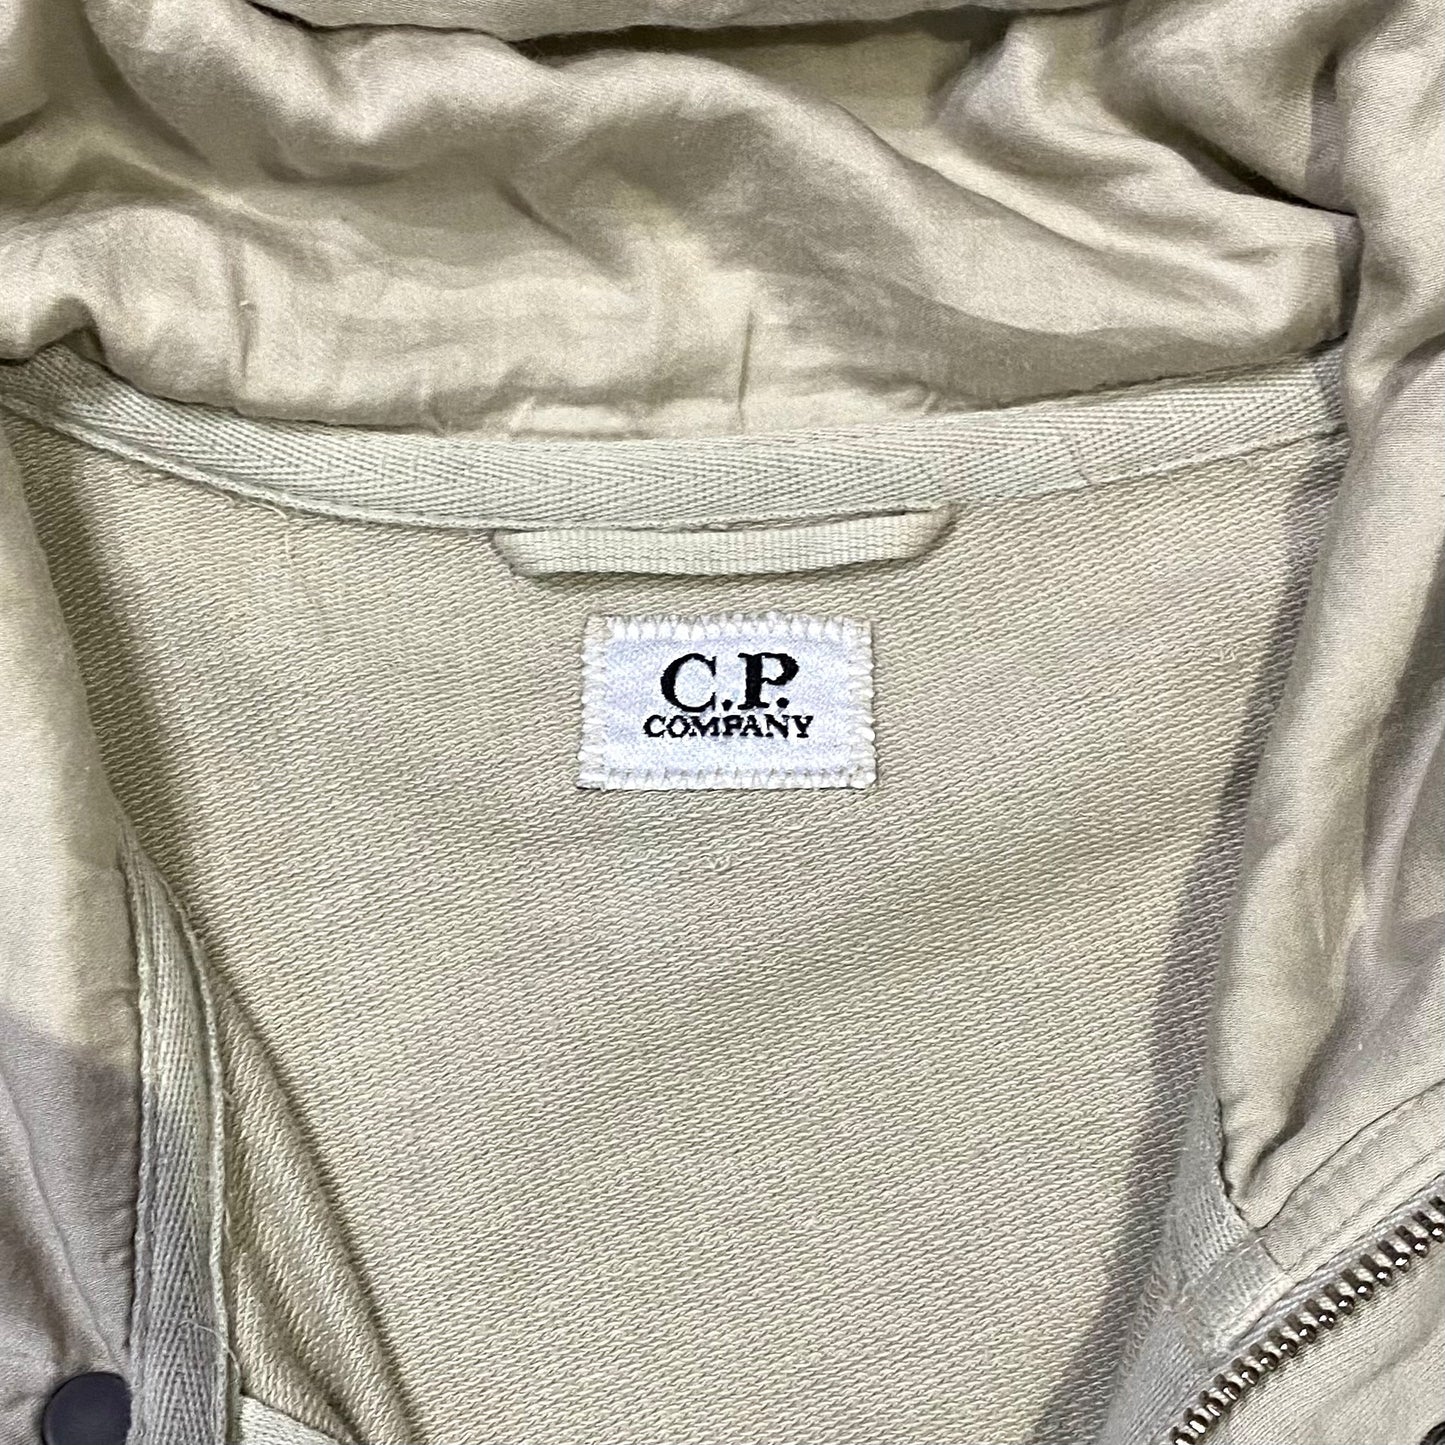 00's "C.P COMPANY" Hooded zip up jacket